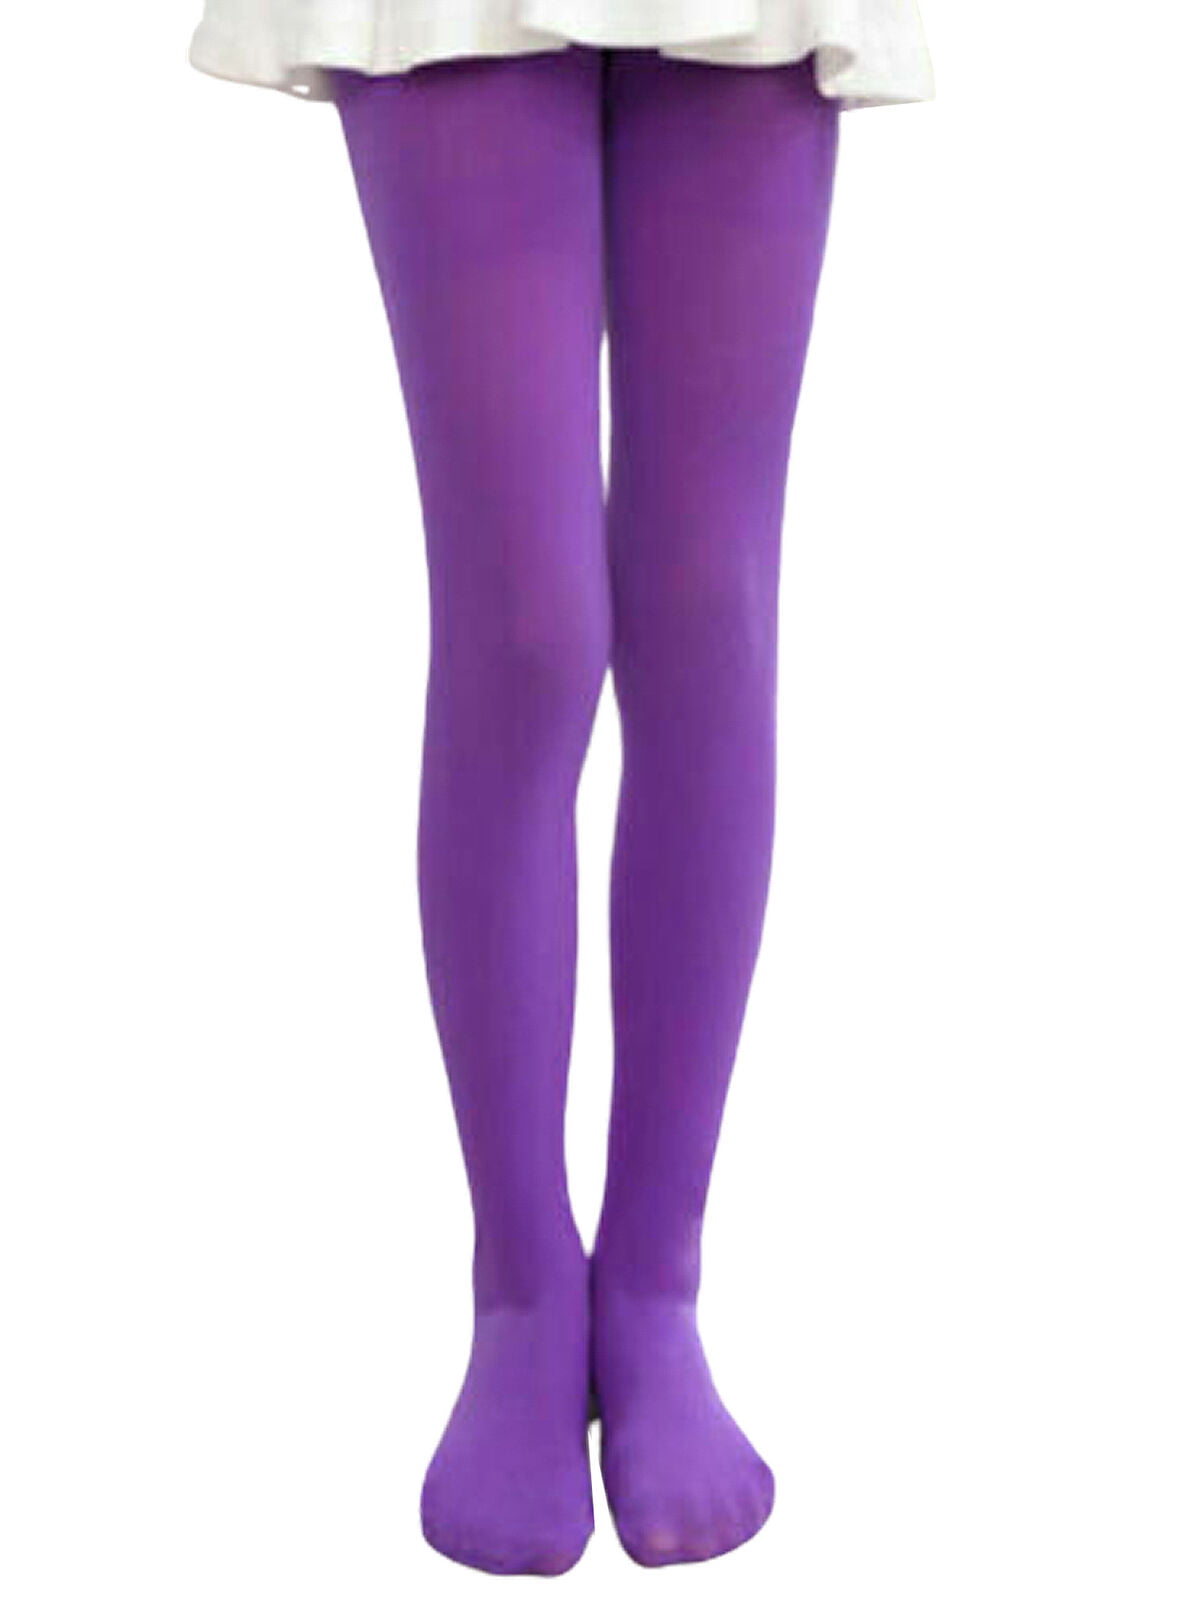 Yamalans Kids Girls Solid Color Leggings Warm Cotton Soft Tights Footed Legging Pants Pantyhose Dance Long Socks Stockings 